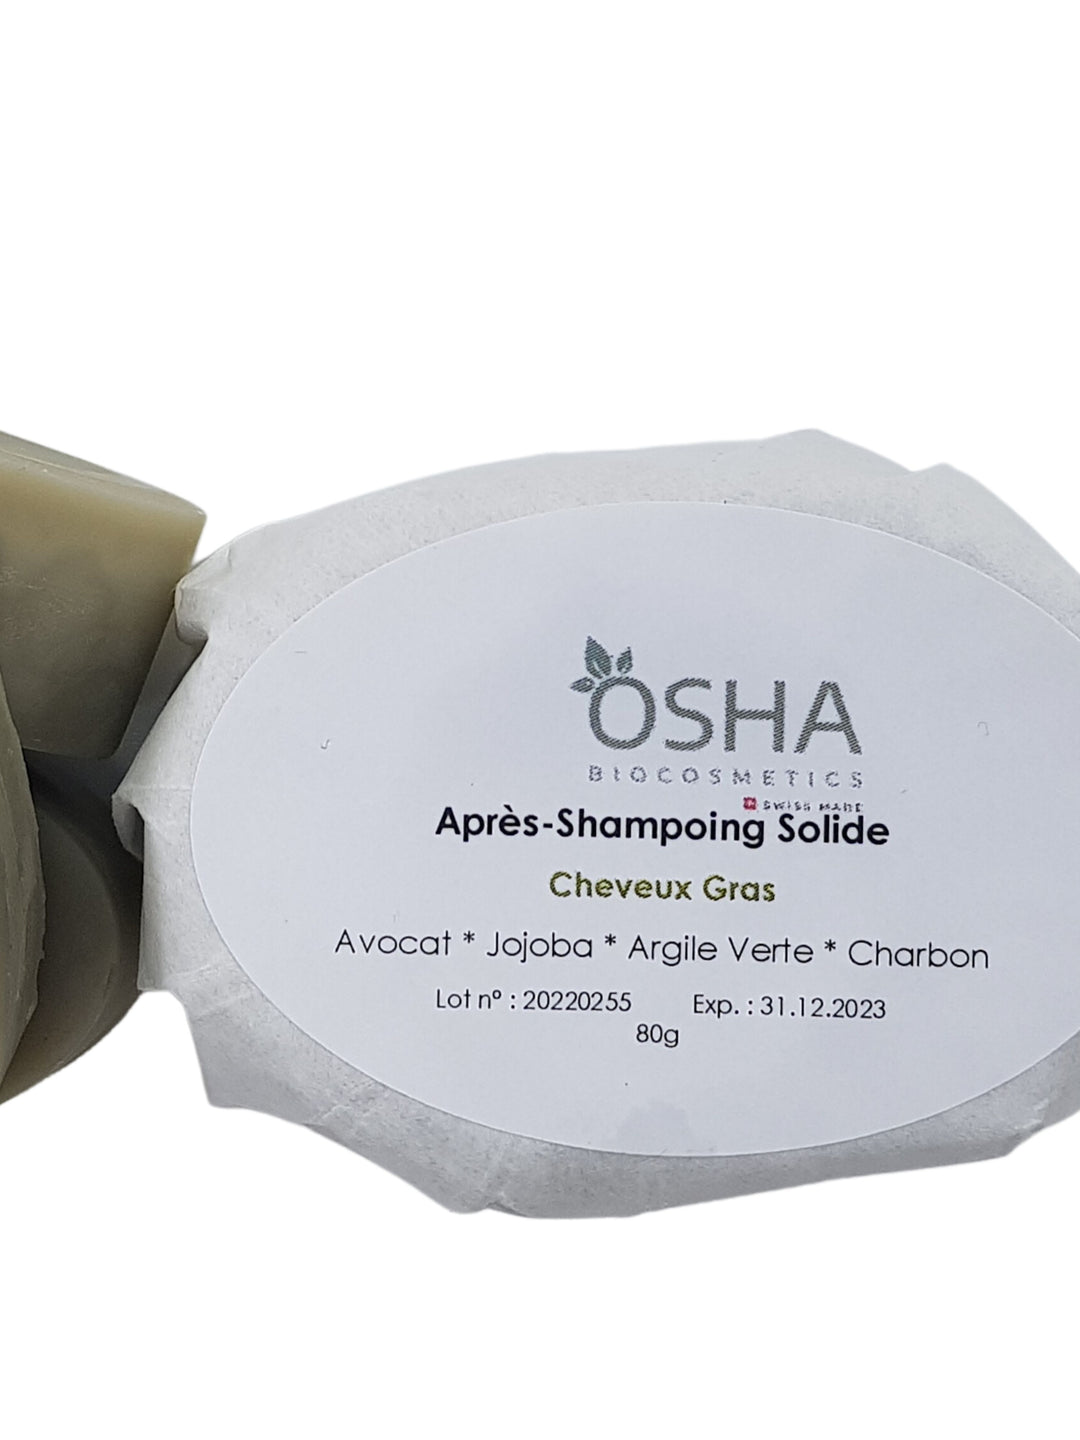 Après-Shampoing Solide Charbon & Argile Verte - OSHA Biocosmetics